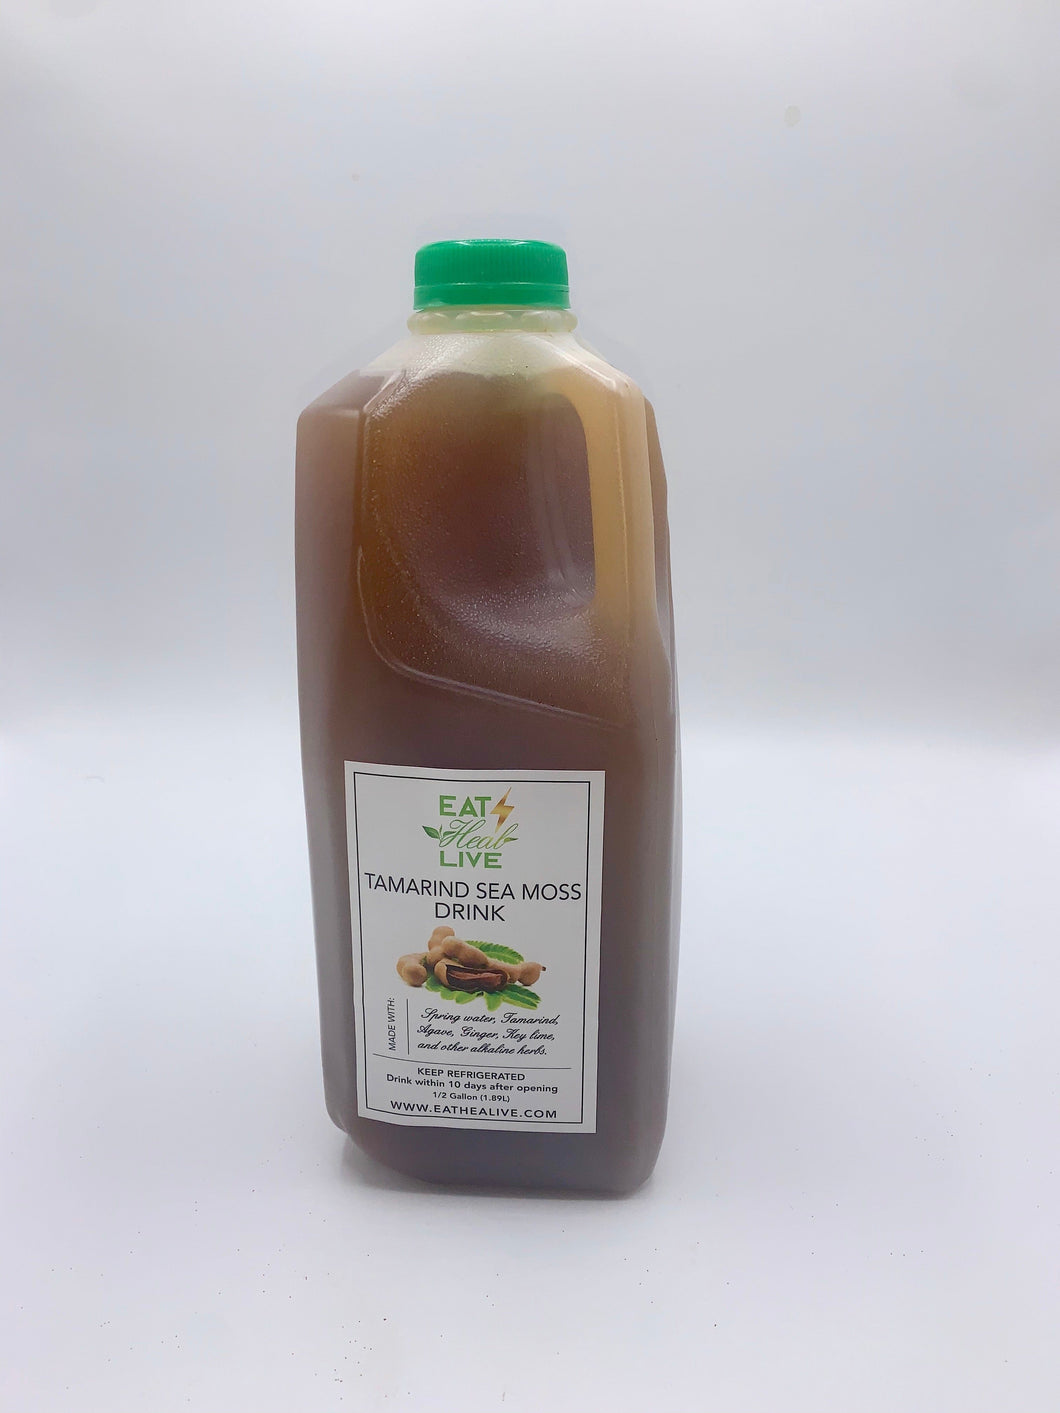 Tamarind sea moss drink